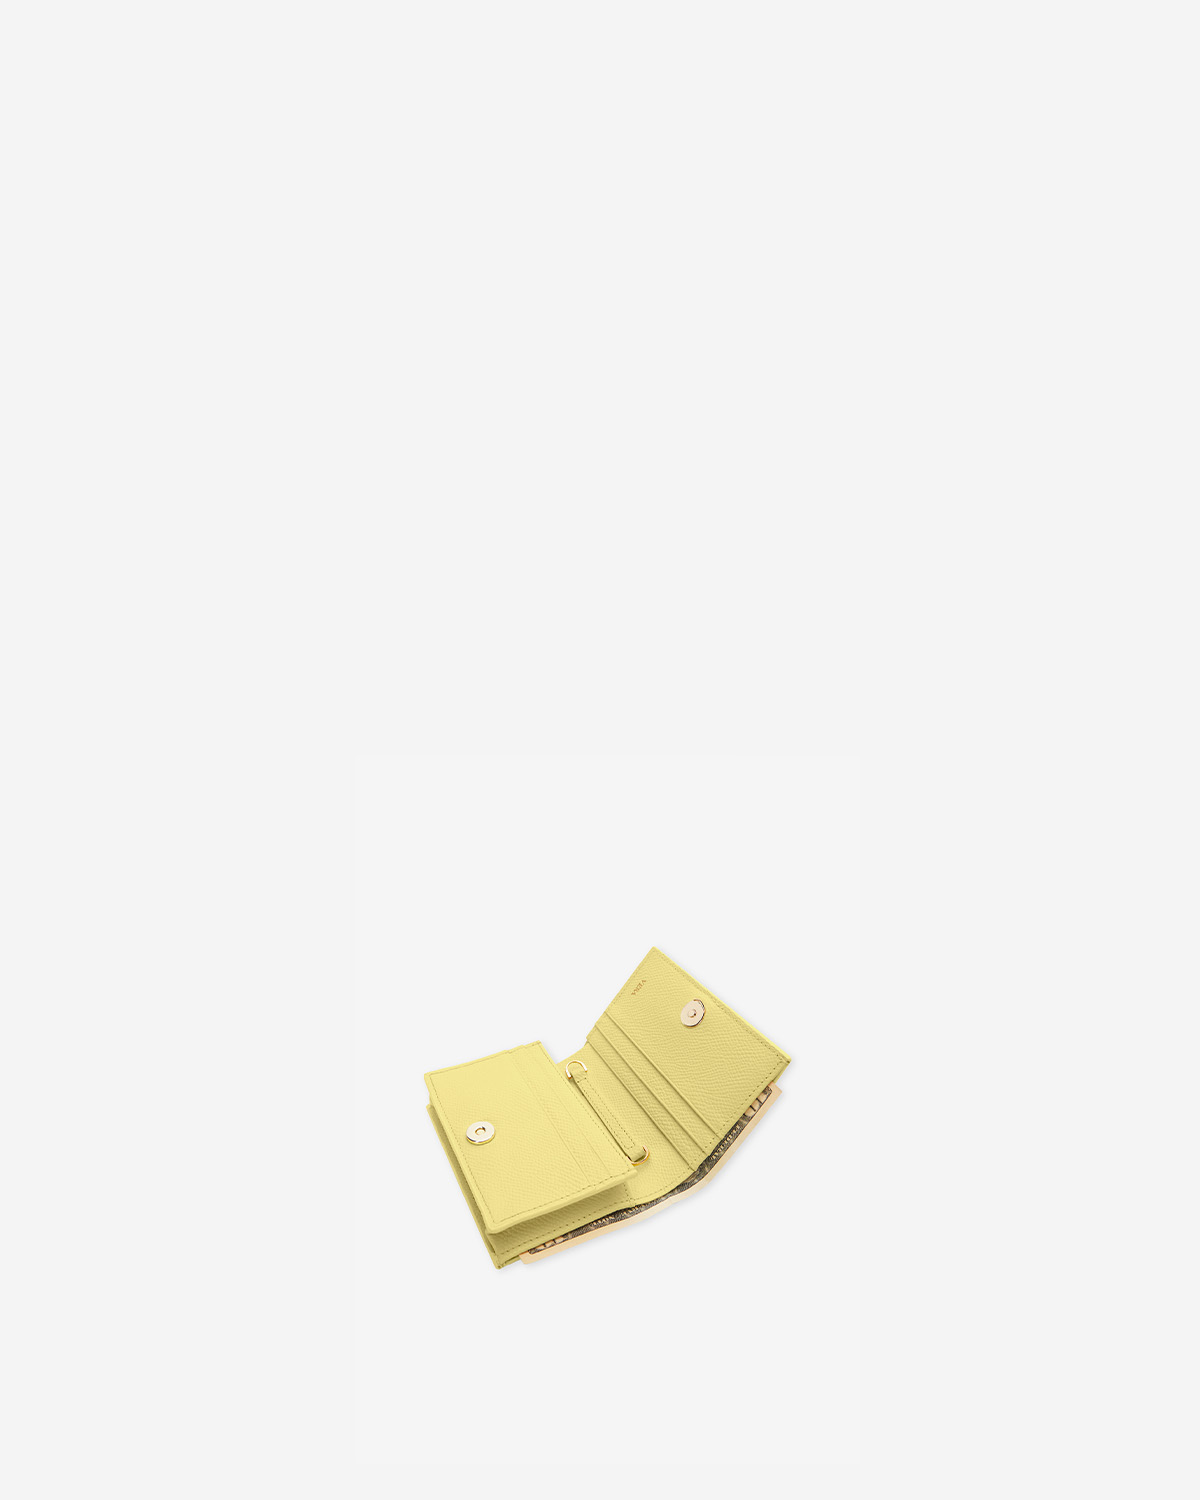 VERA Emily Flap Wallet with Leather Braided Gold Chain in Happy Yellow กระเป๋าสตางค์หนังแท้ แบบเปิดฝา พร้อมสายโซ่สีทองร้อยหนัง สีเหลือง